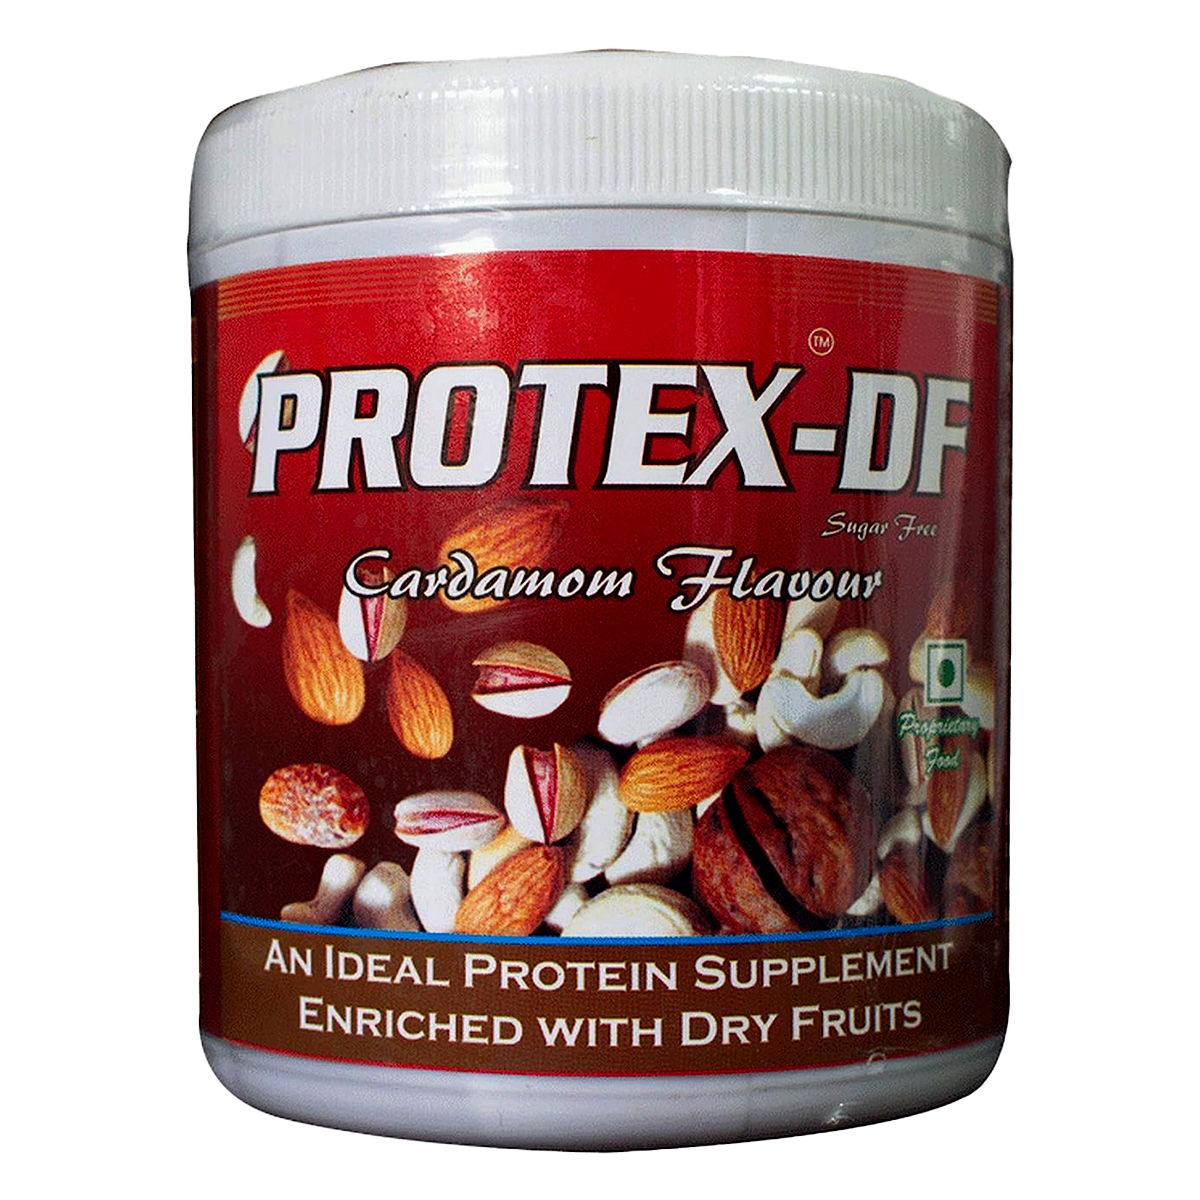 Buy Protex-DF Cardamom Flavour Powder, 200 gm Online